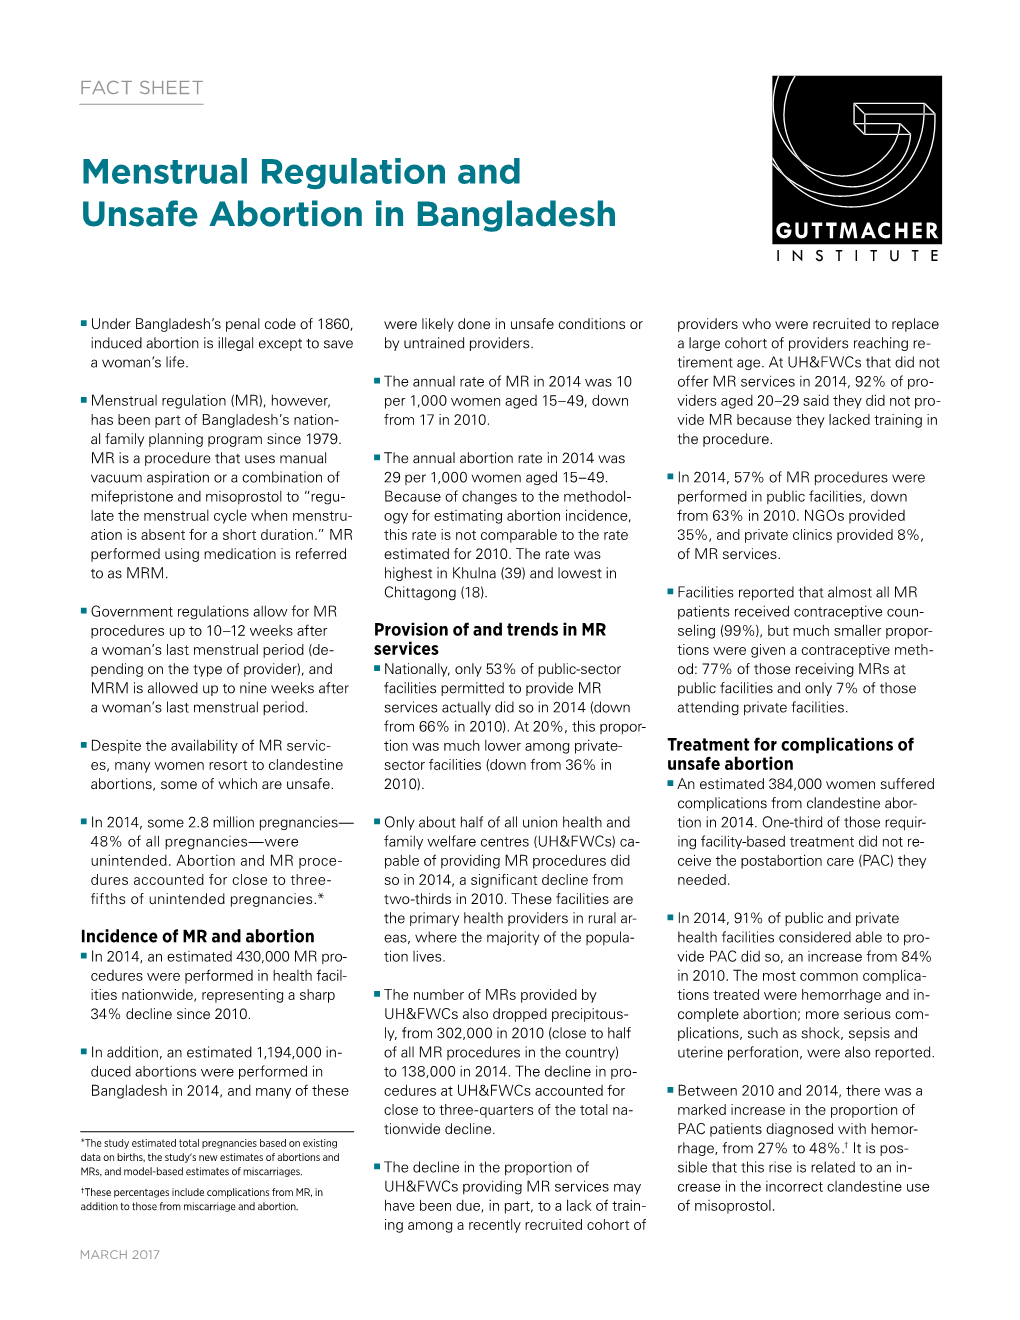 Menstrual Regulation and Unsafe Abortion in Bangladesh